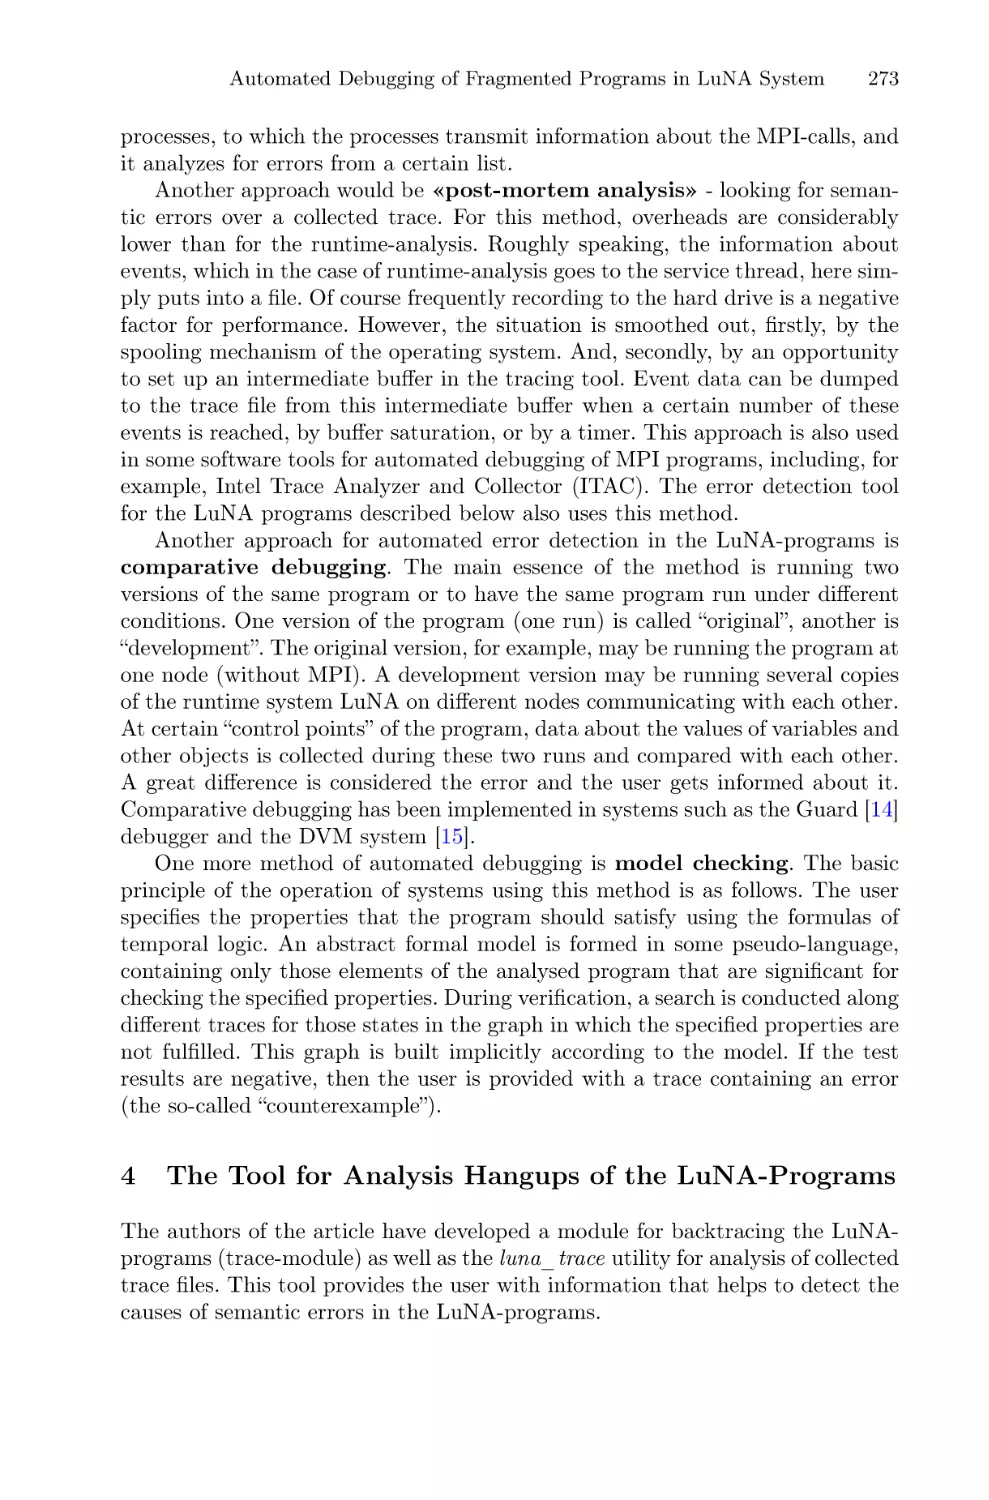 4 The Tool for Analysis Hangups of the LuNA-Programs